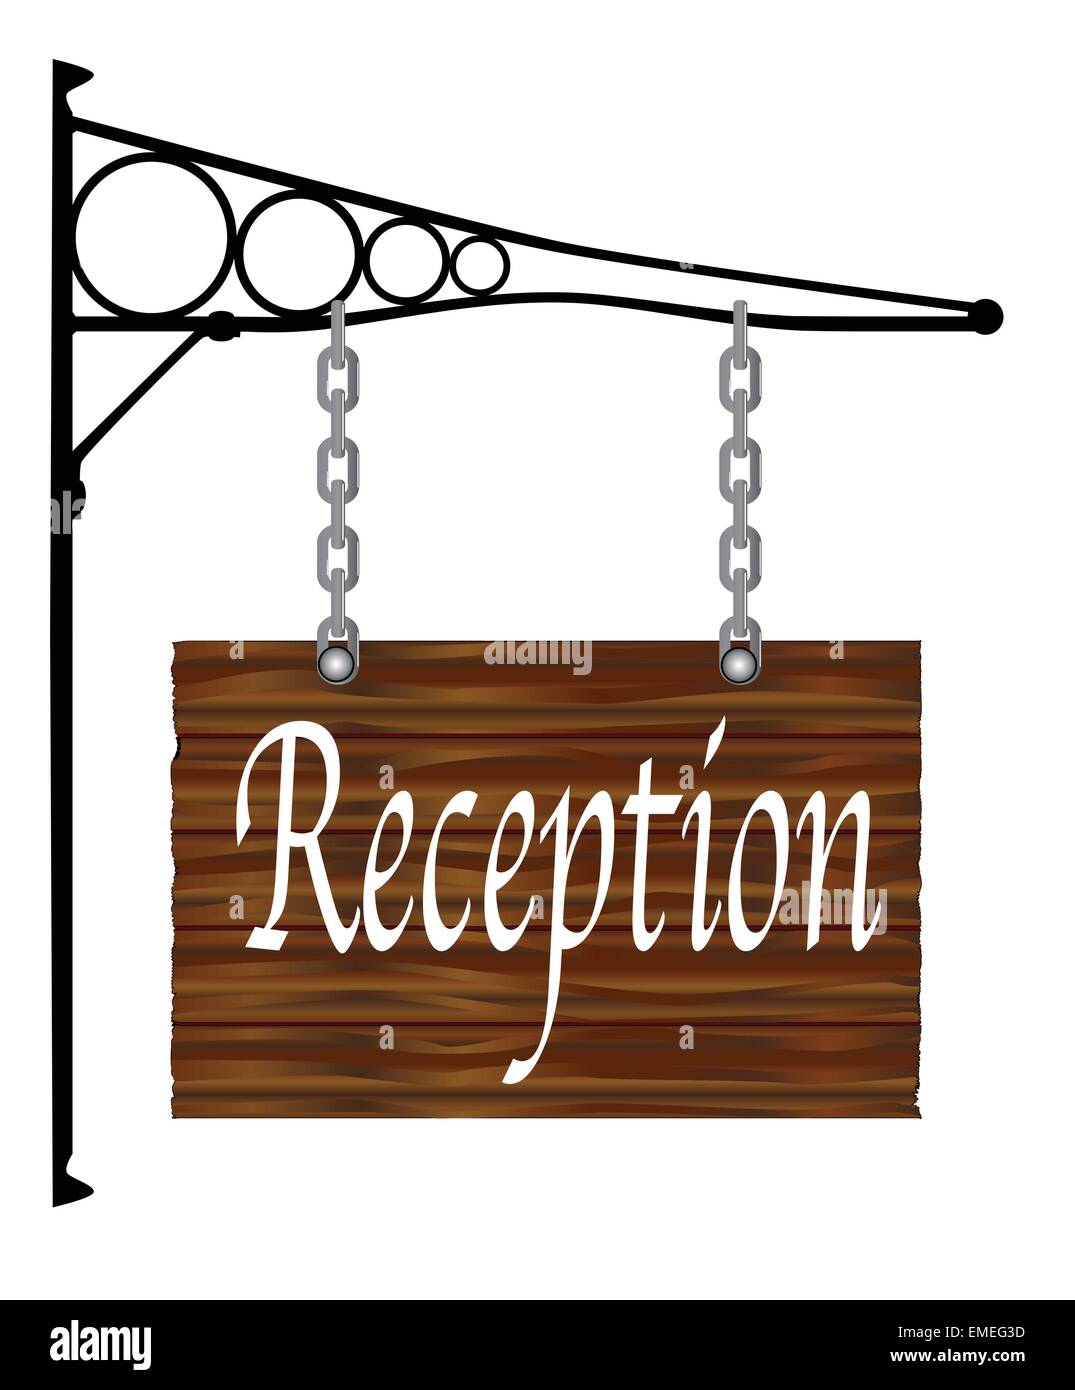 Reception Sign Stock Vector